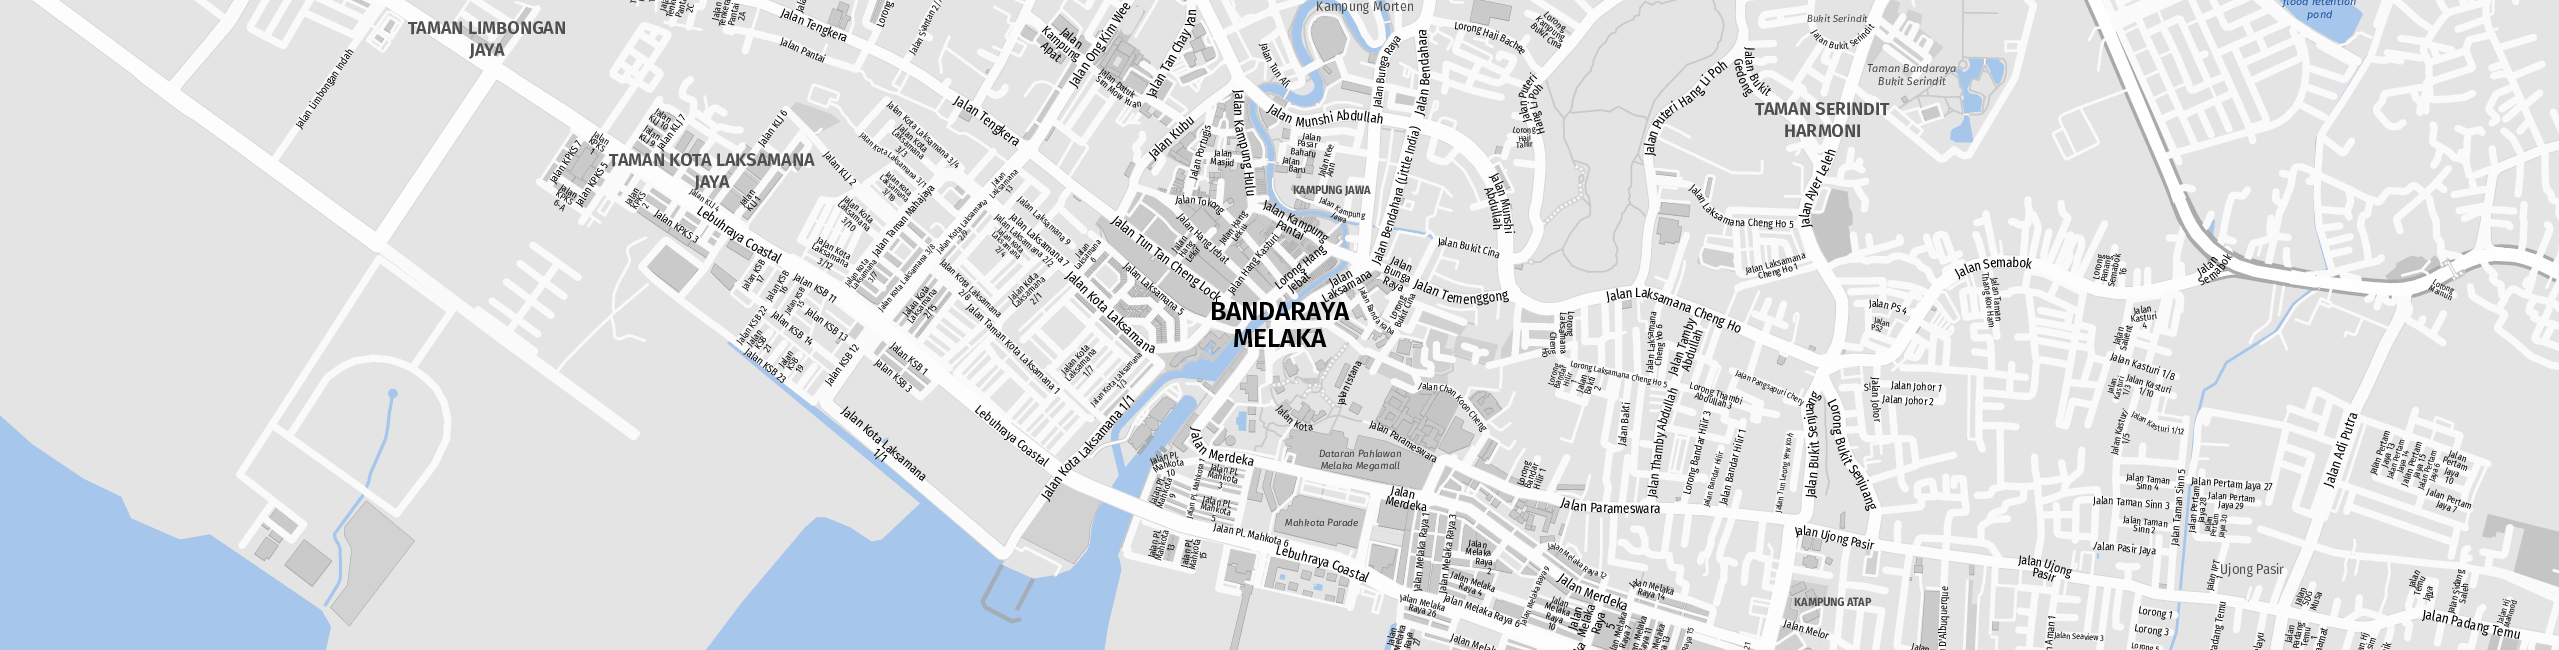 Stadtplan Malakka-Stadt zum Downloaden.